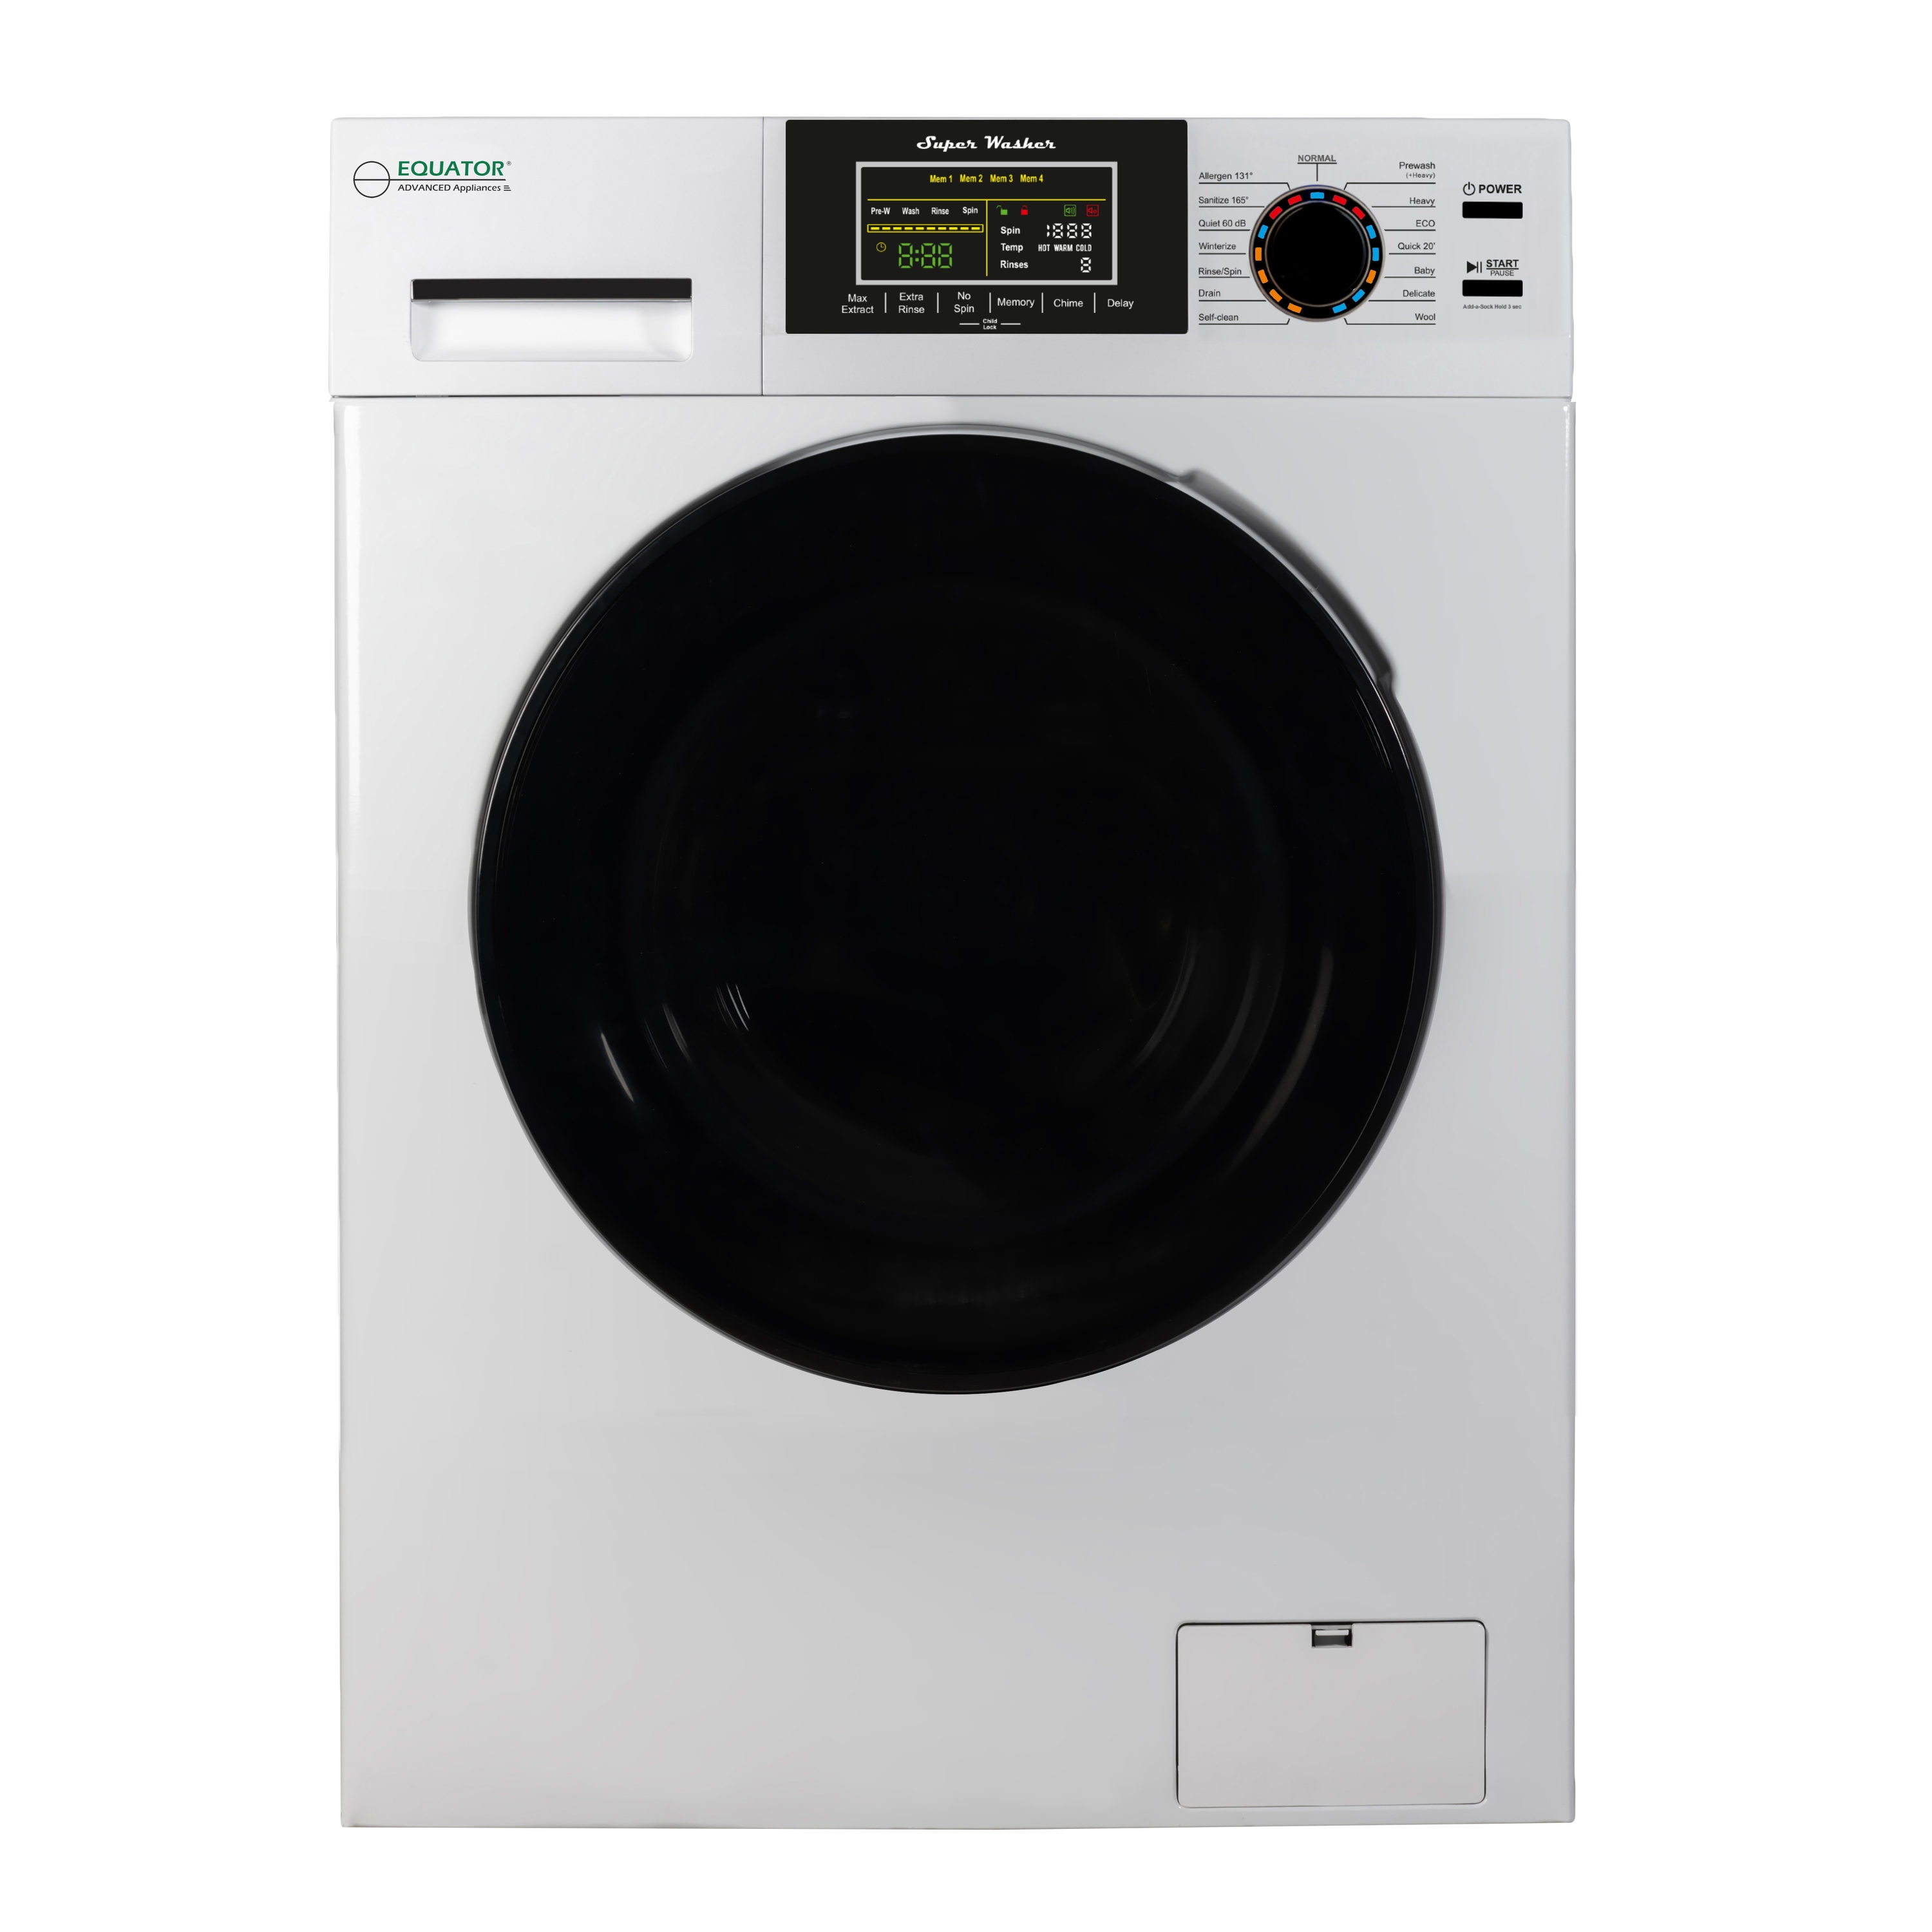 5-equator-advanced-appliances-medium-3-5-4-5-cu-ft-washing-machines